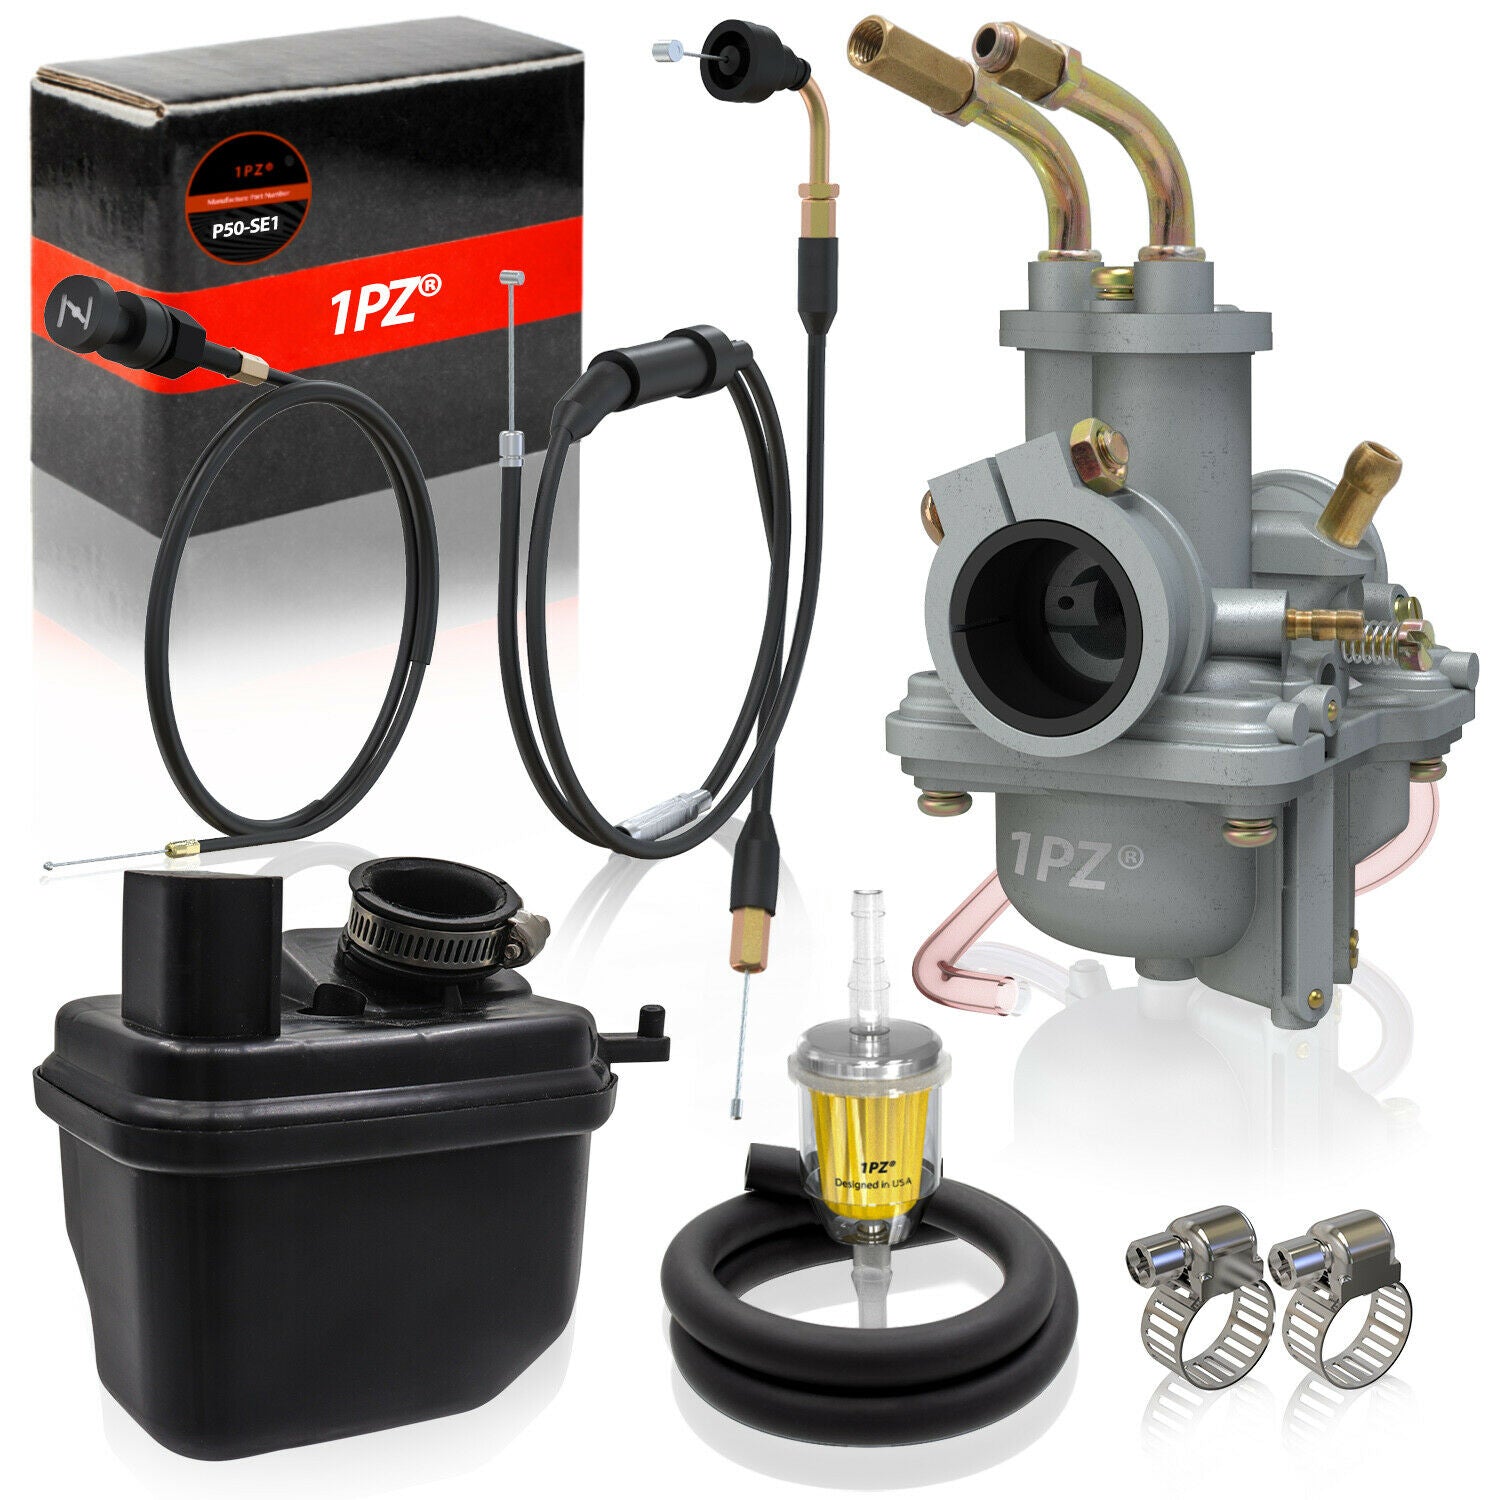 1PZ Carburetor Air Filter Fuel Filter & Throttle Choke Cable Replaceme – 1PZ®  Brand